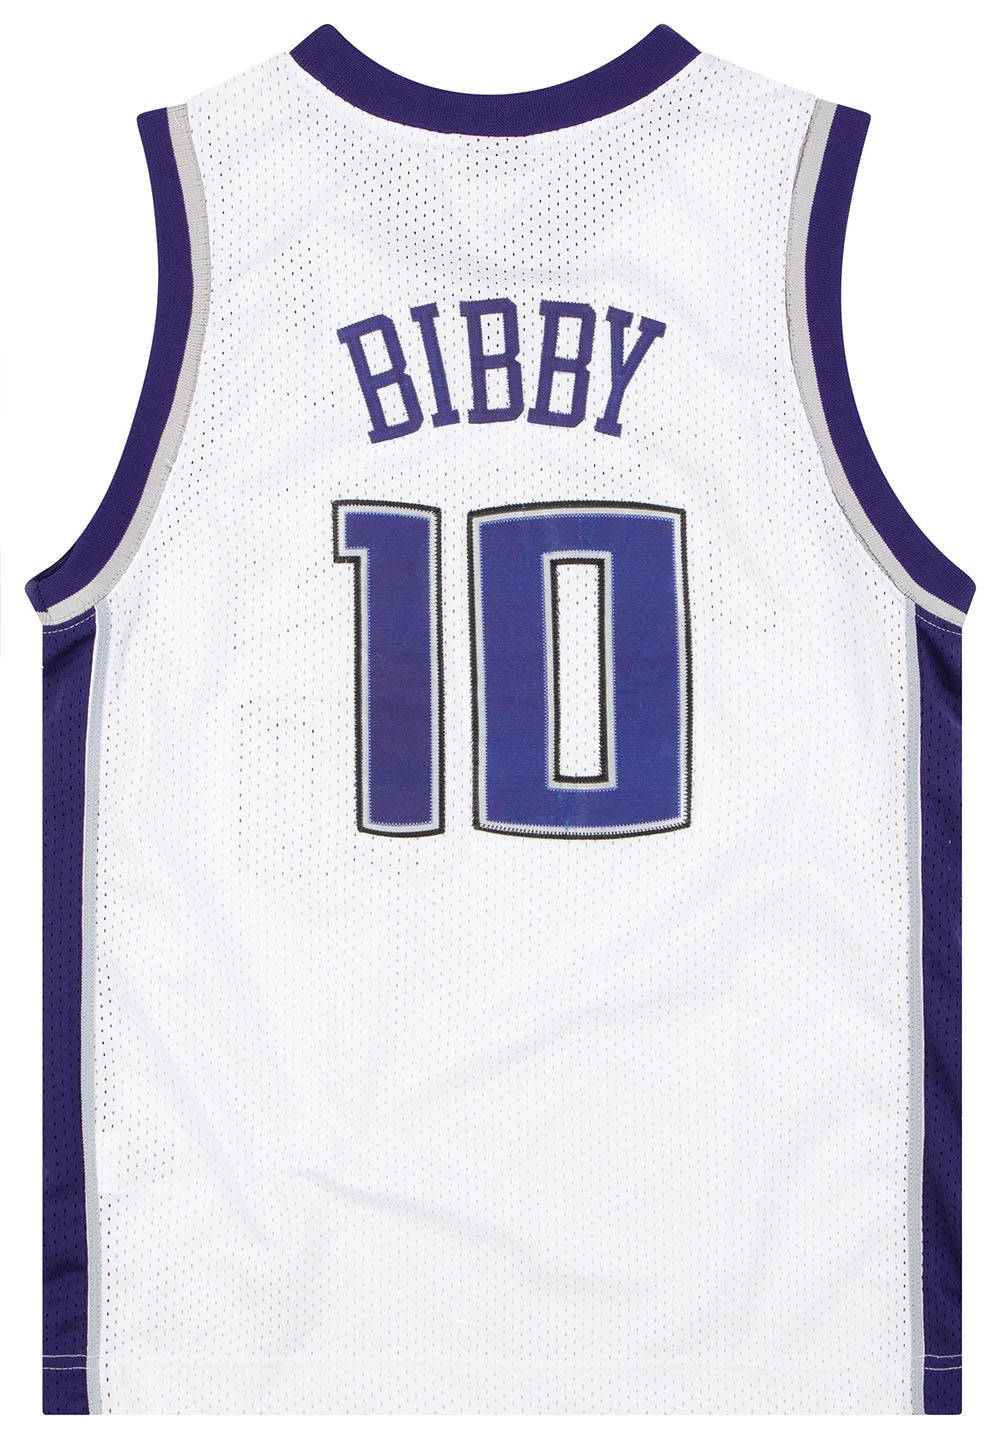 NEW Nike Mike Bibby Sacramento Kings Swingman Hardwood Classic NBA